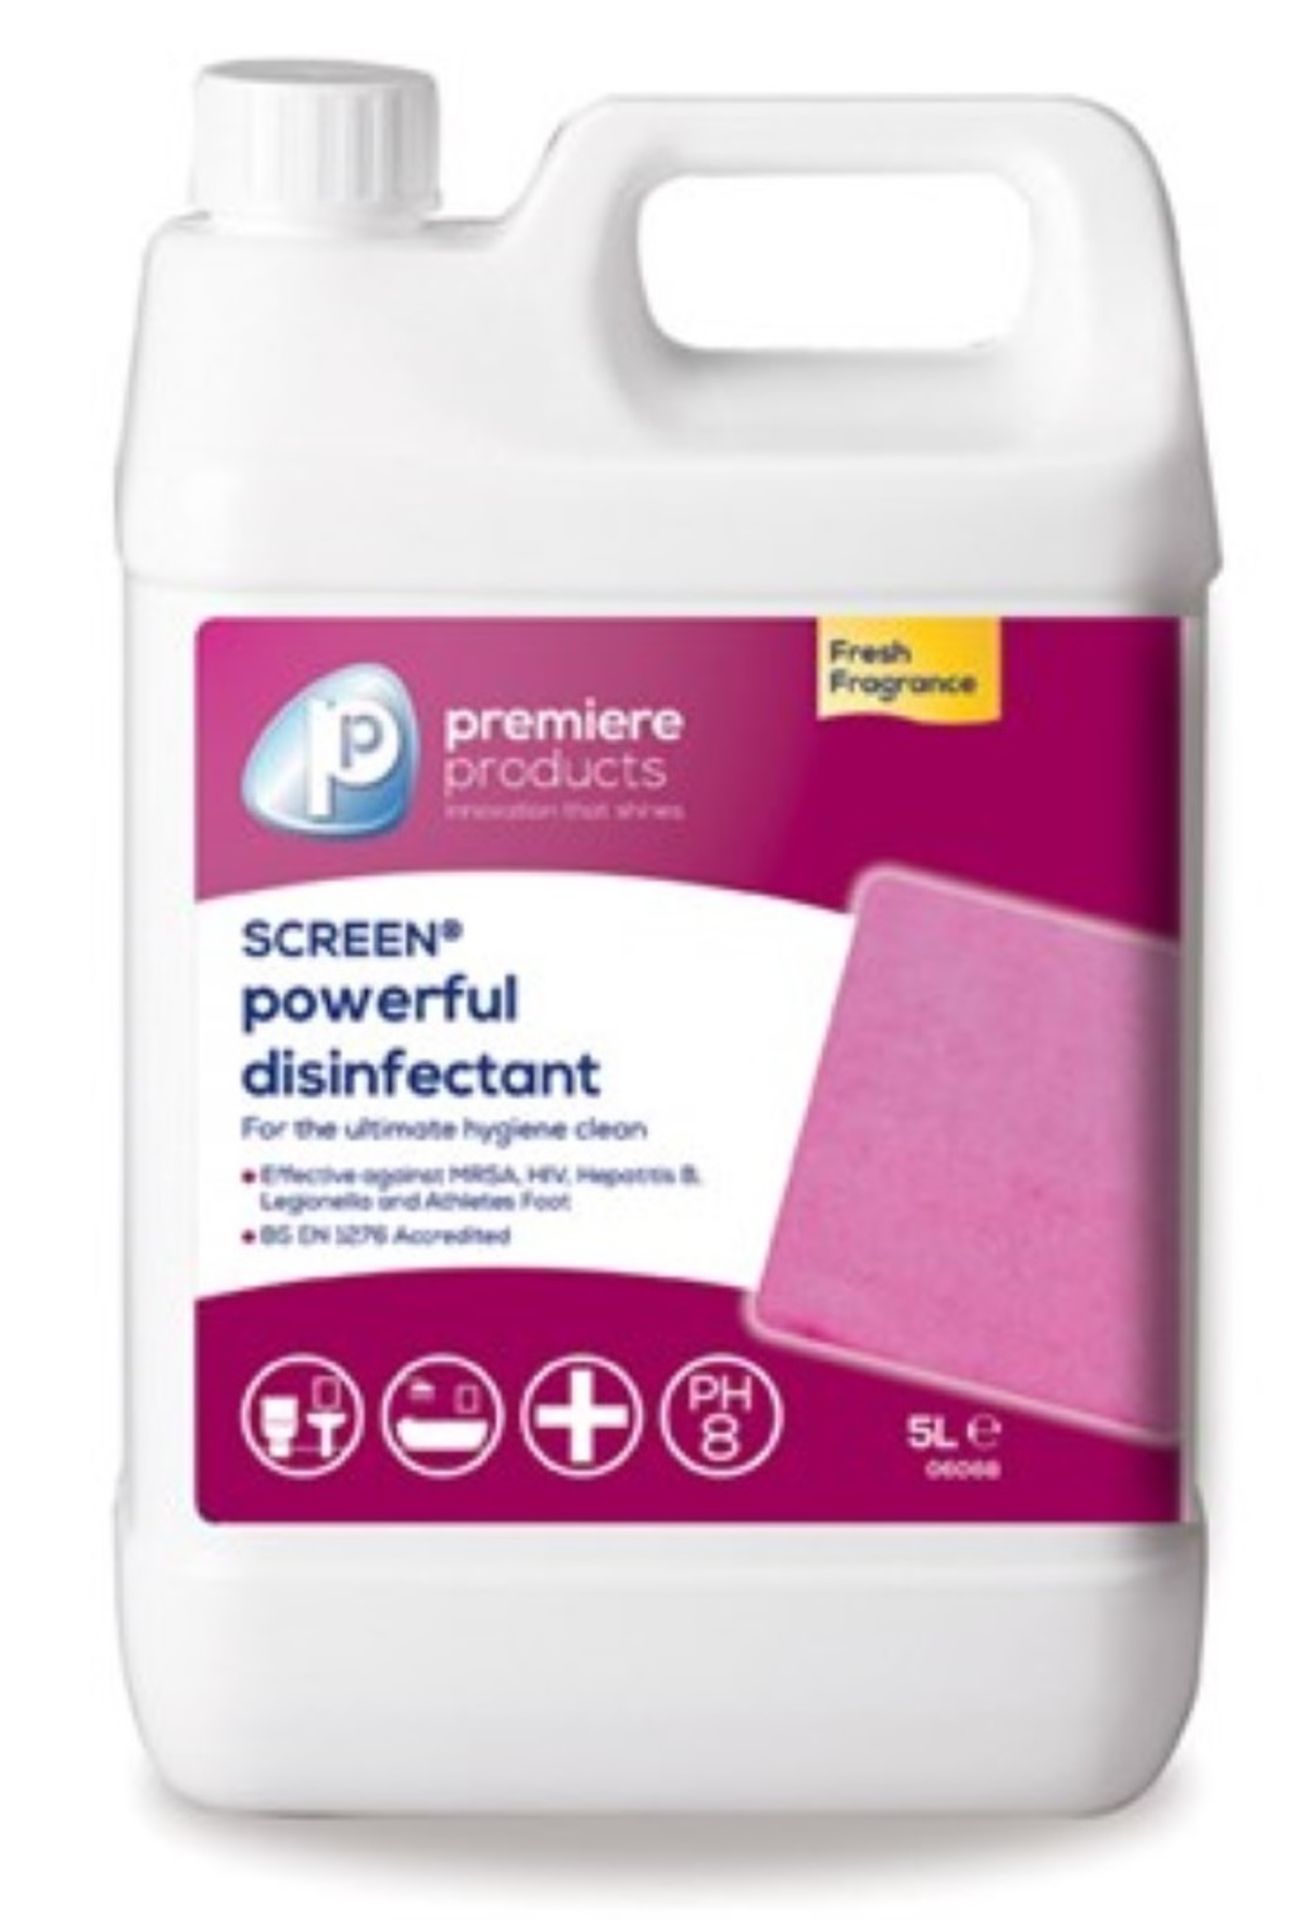 2 x Premiere 5 Litre Screen Virucidal Disinfectant - Premiere Products - Includes 2 x 5 Litre Contai